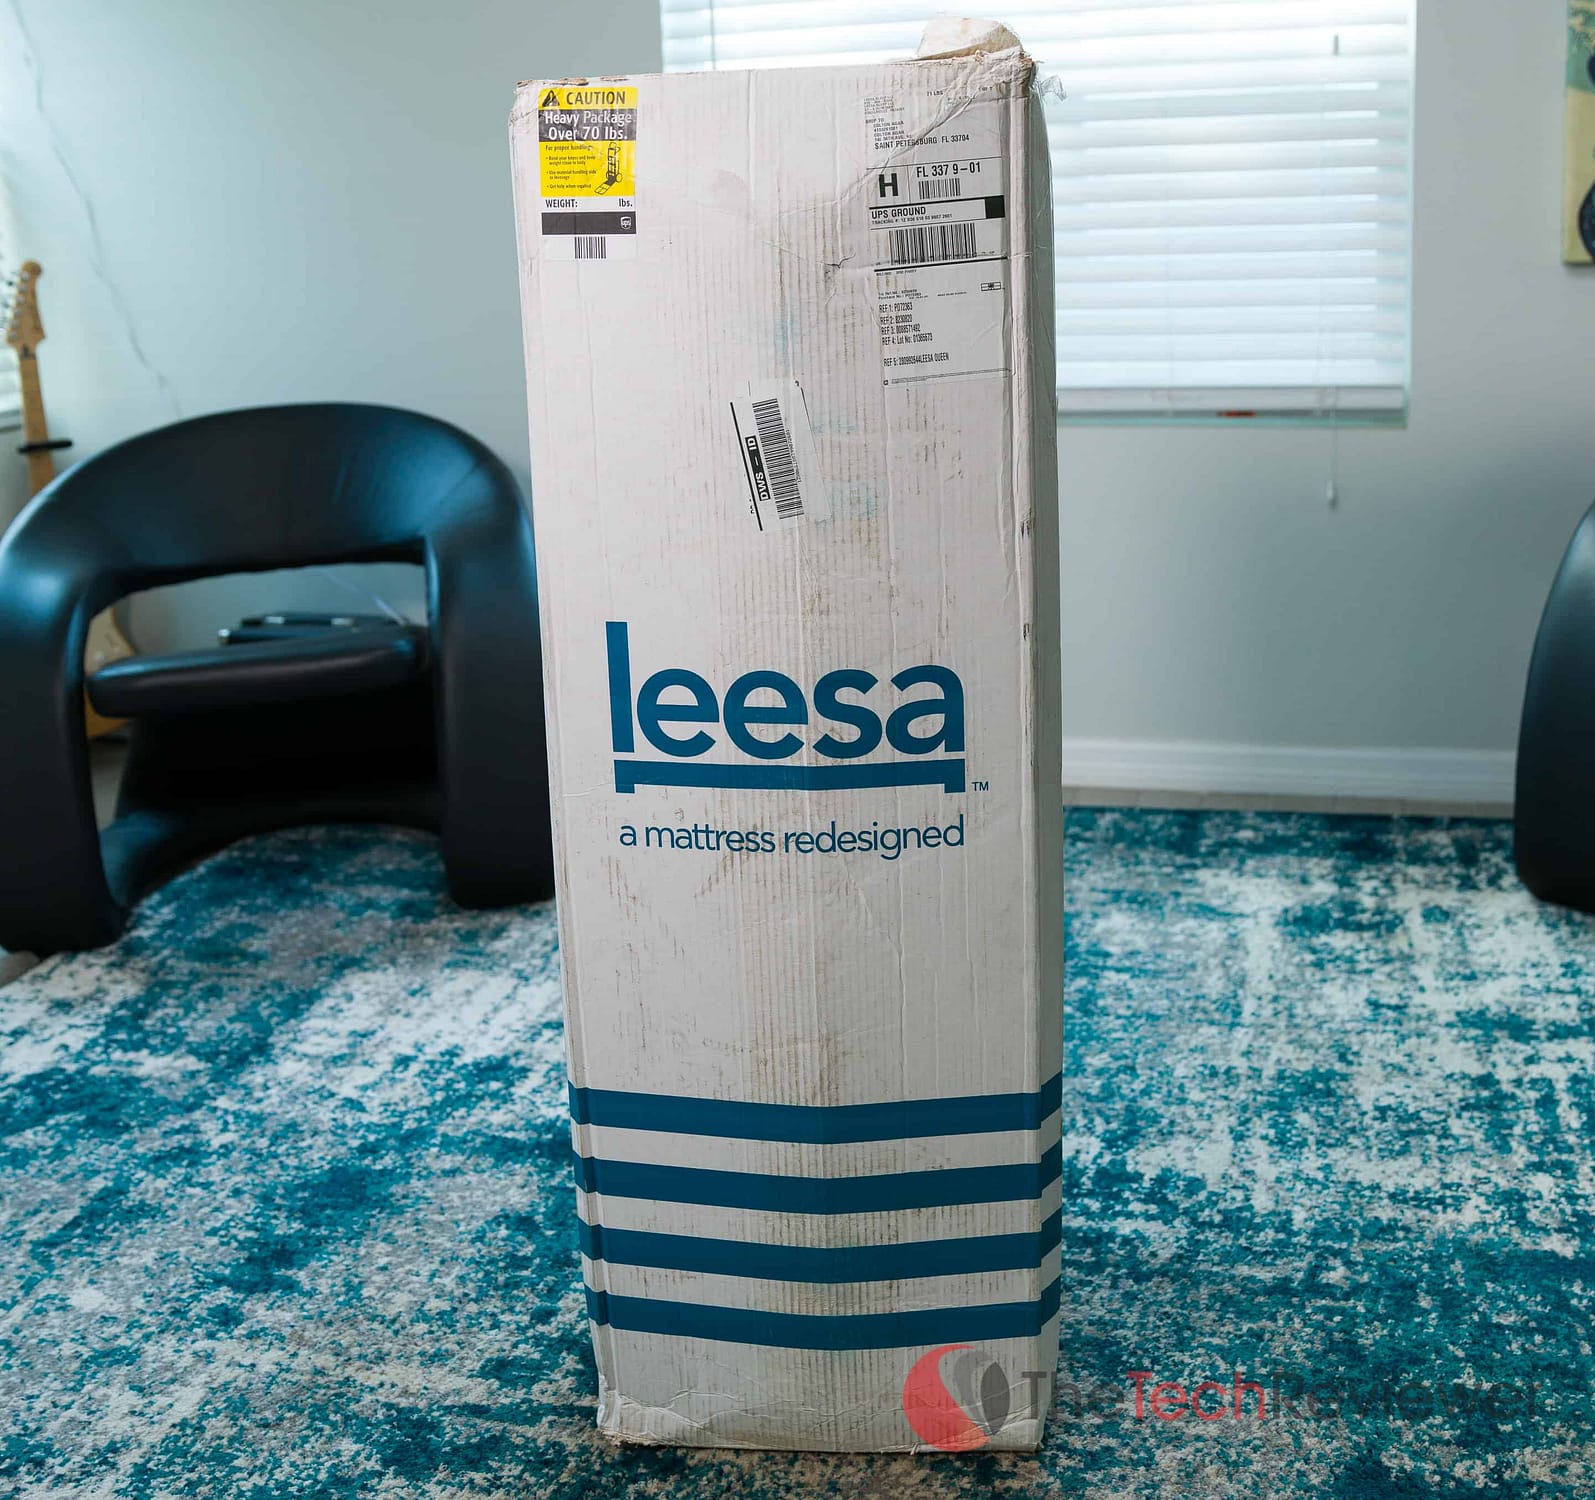 Leesa Mattress Box